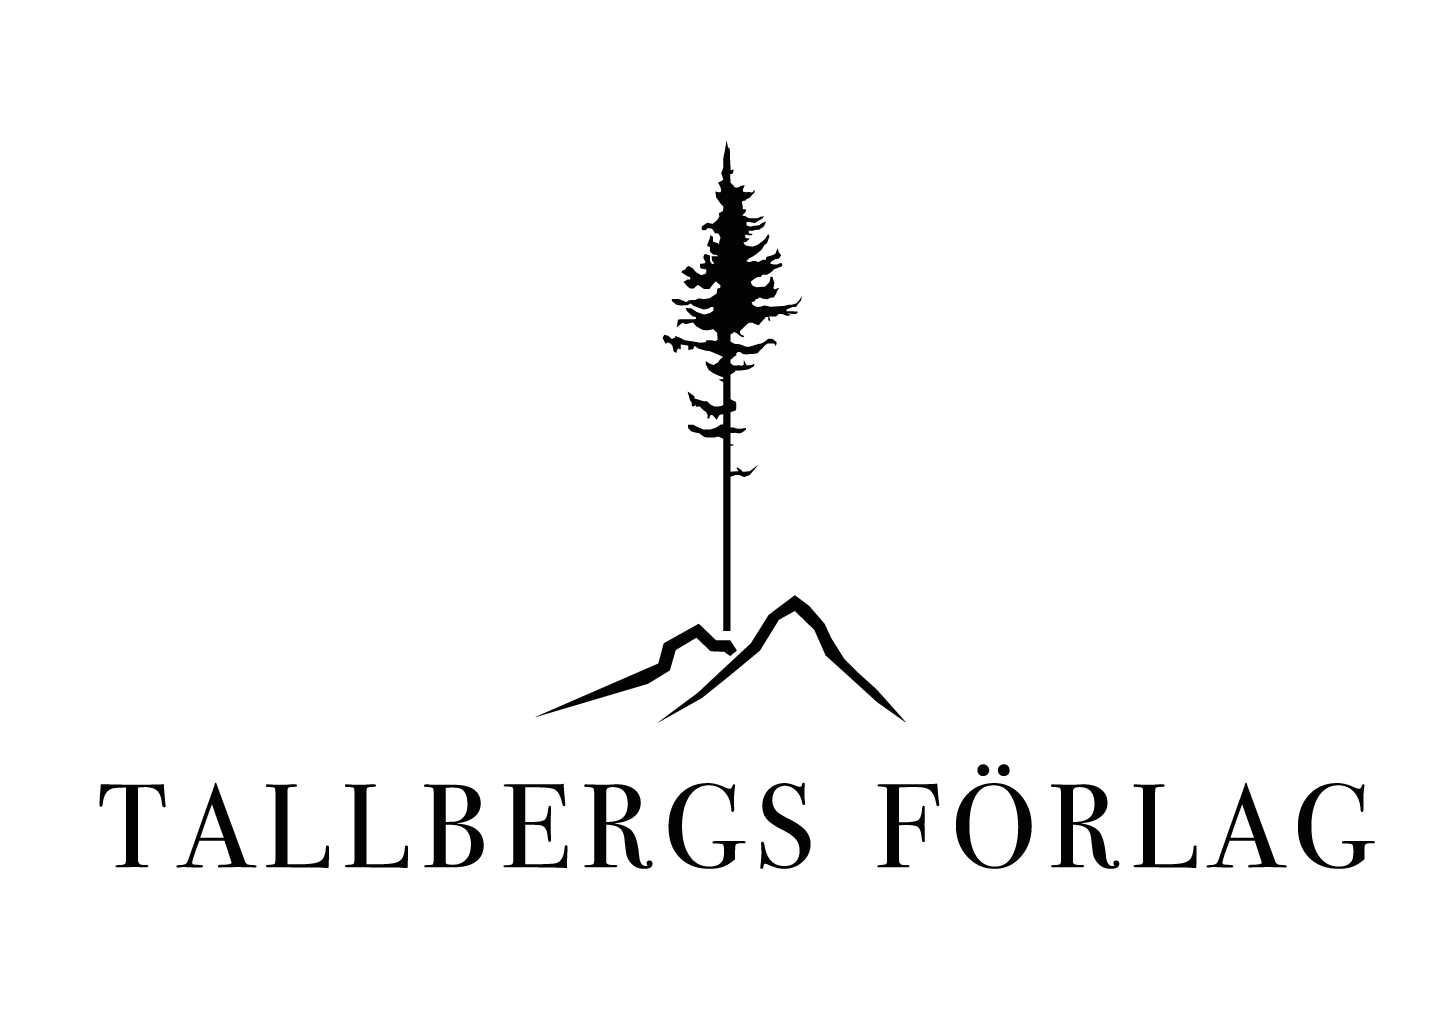 Tallbergs-Förlag-LOGO-button-Black-Tree-and-text